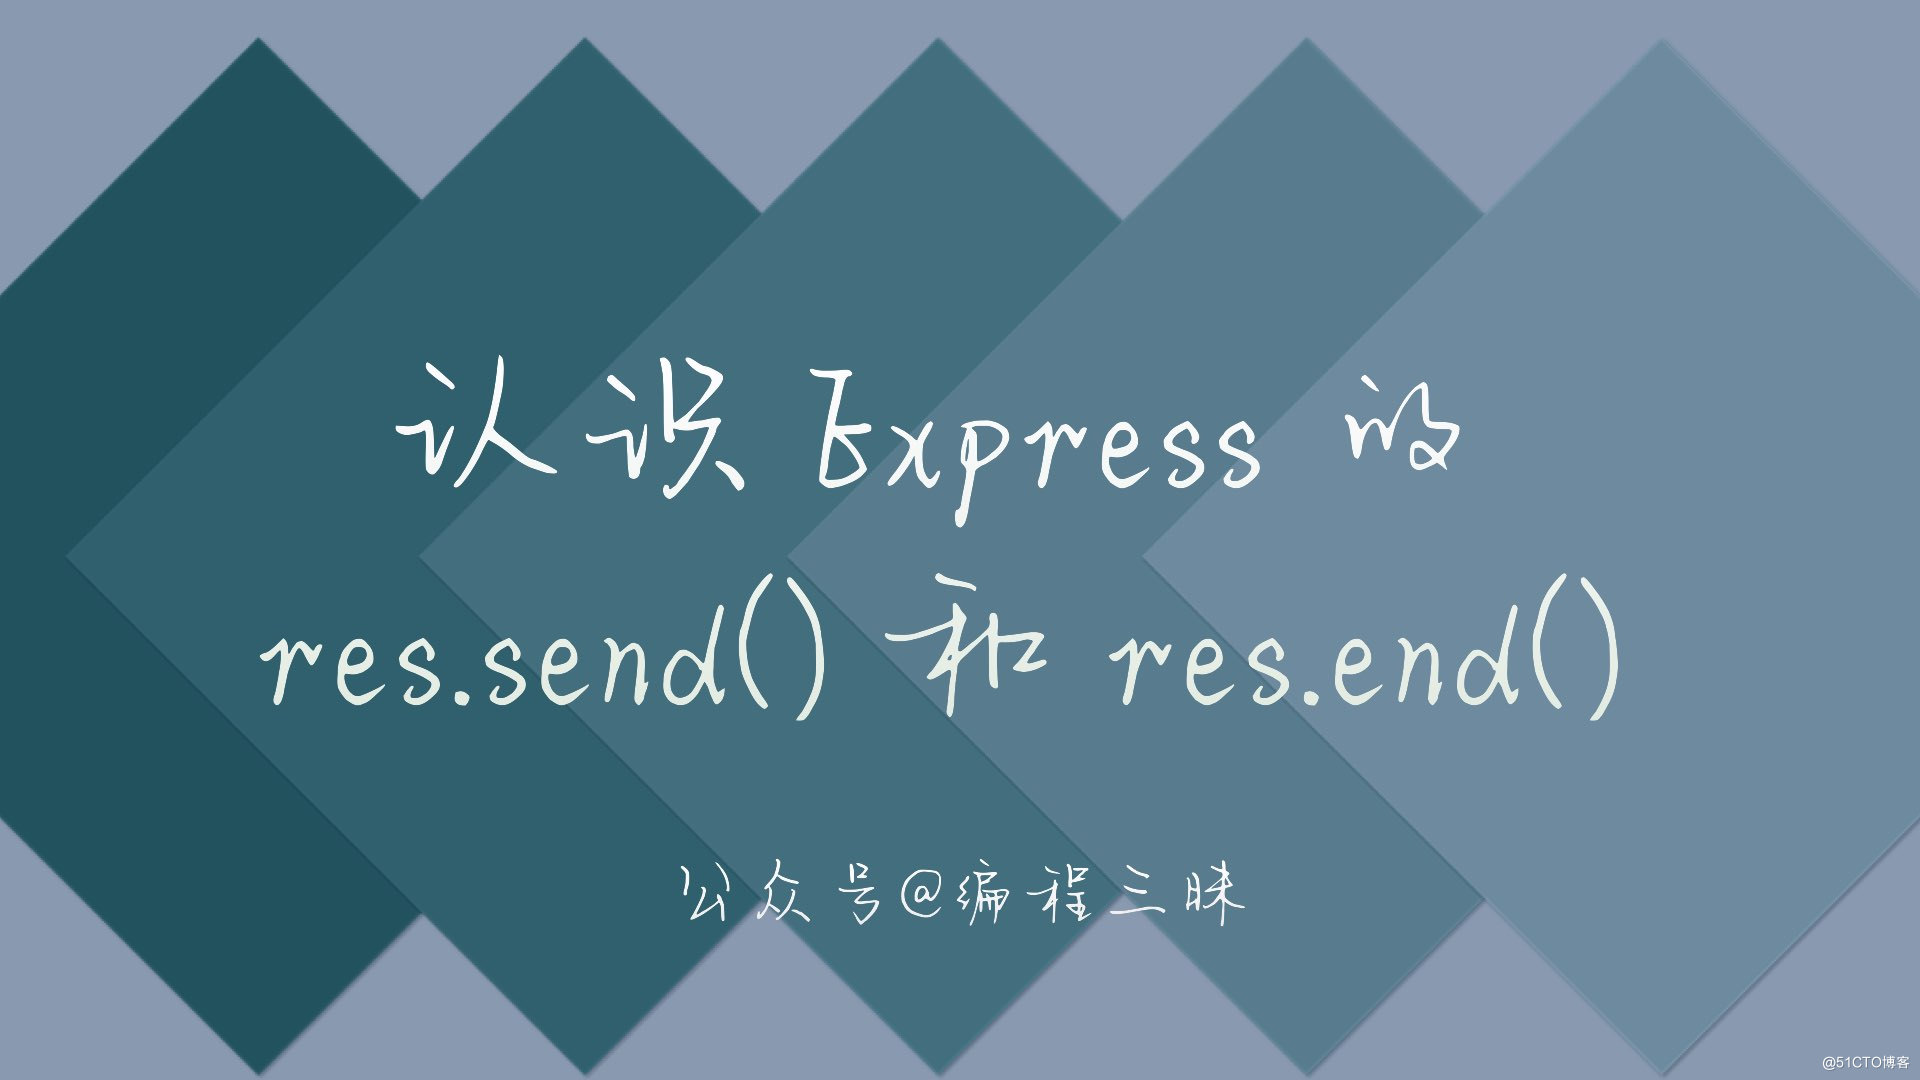 认识 Express 的 res.send() 和 res.end()